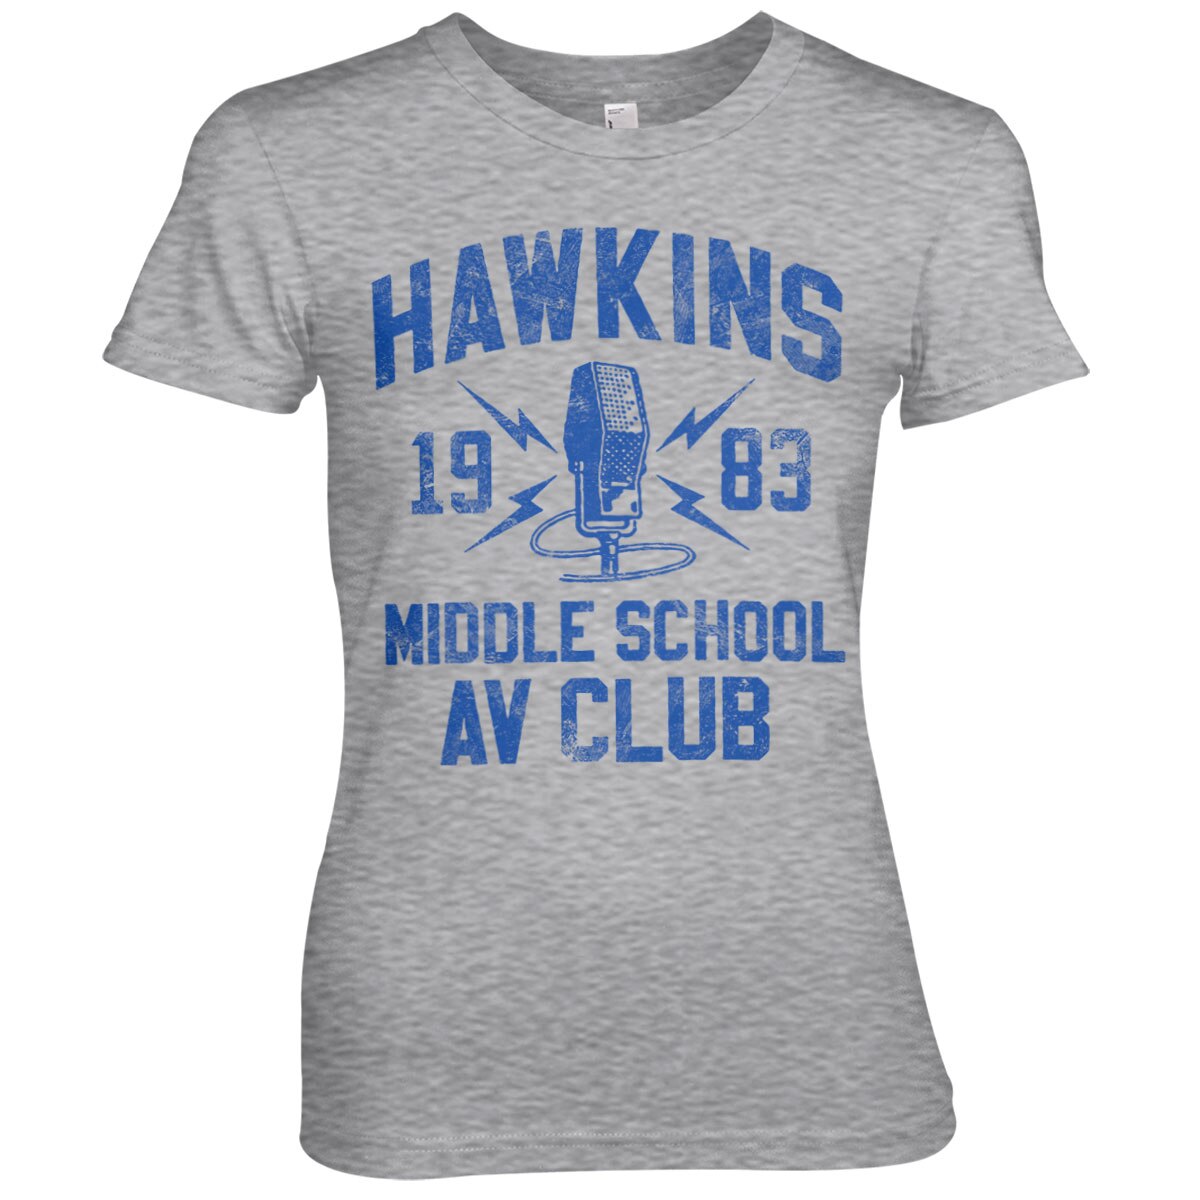 Hawkins 1983 Middle School AV Club Girly Tee